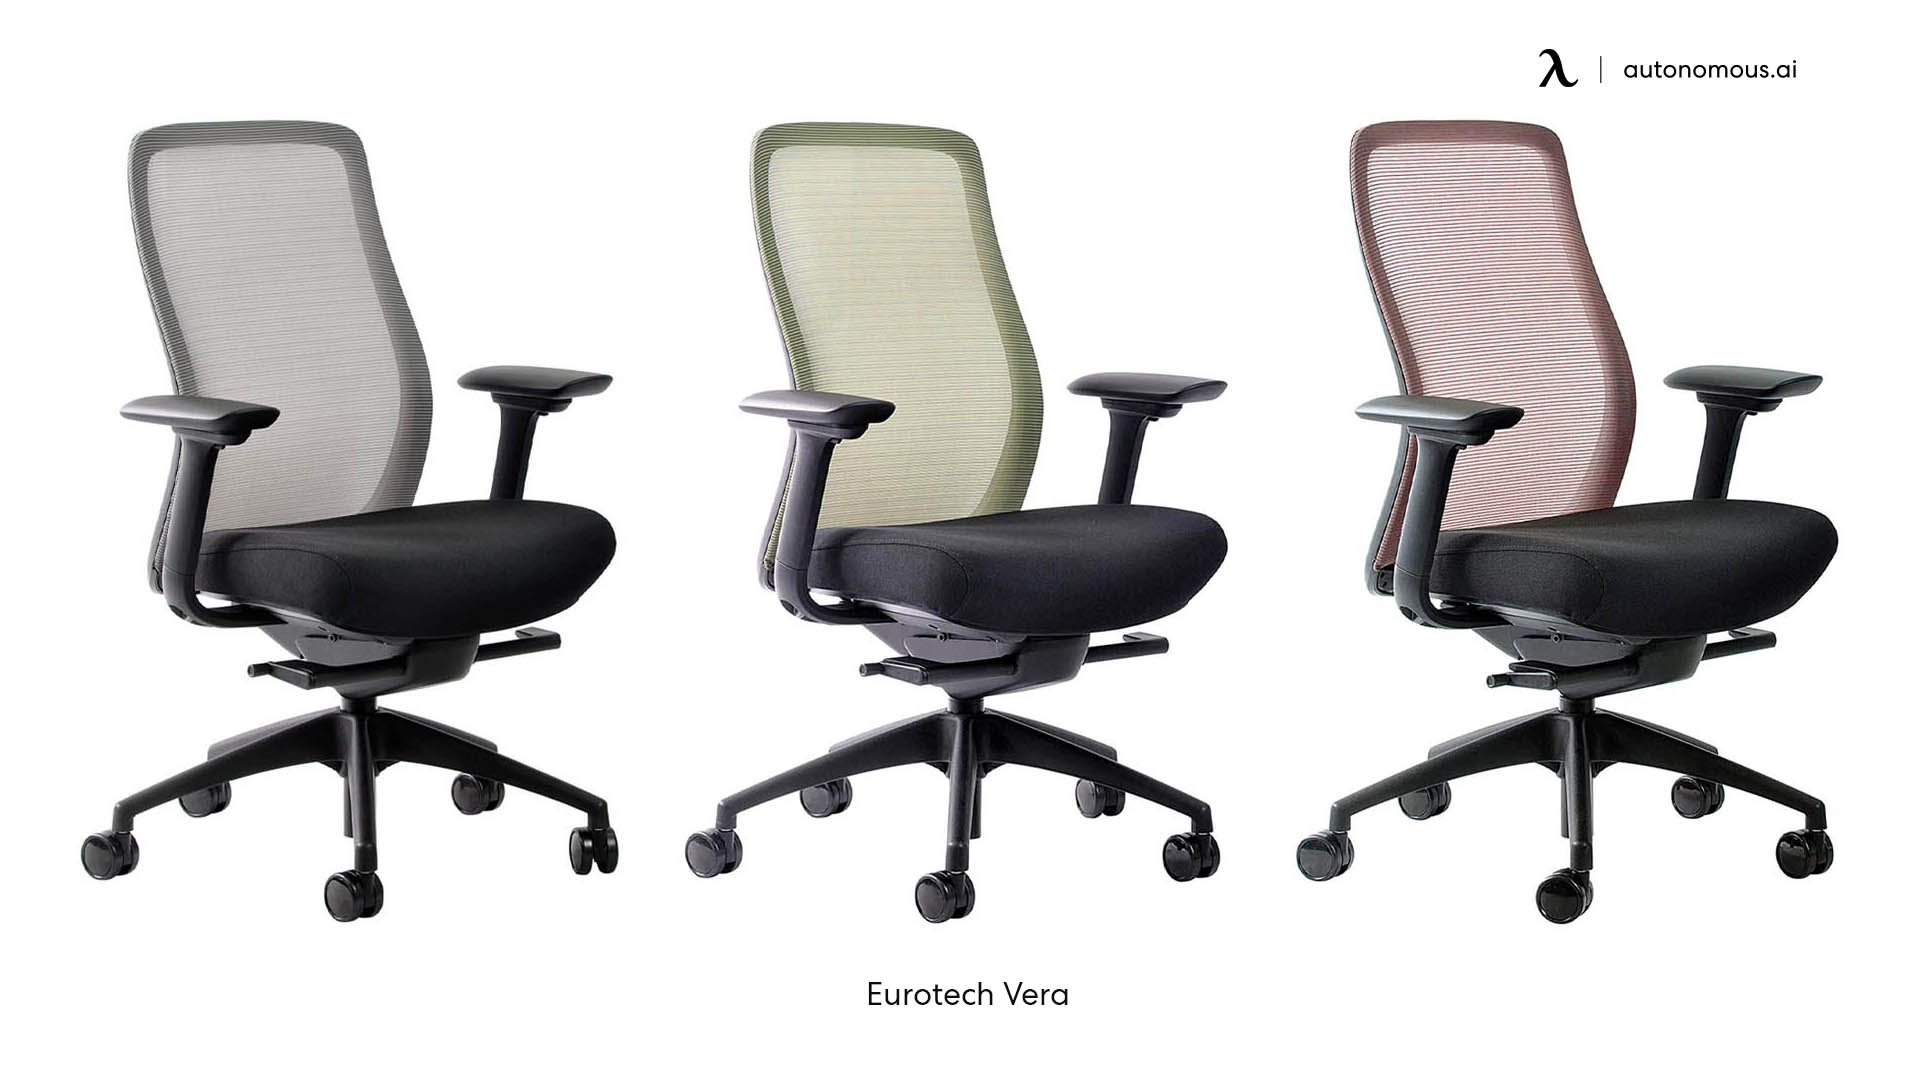 Eurotech Vera 24-hour chair